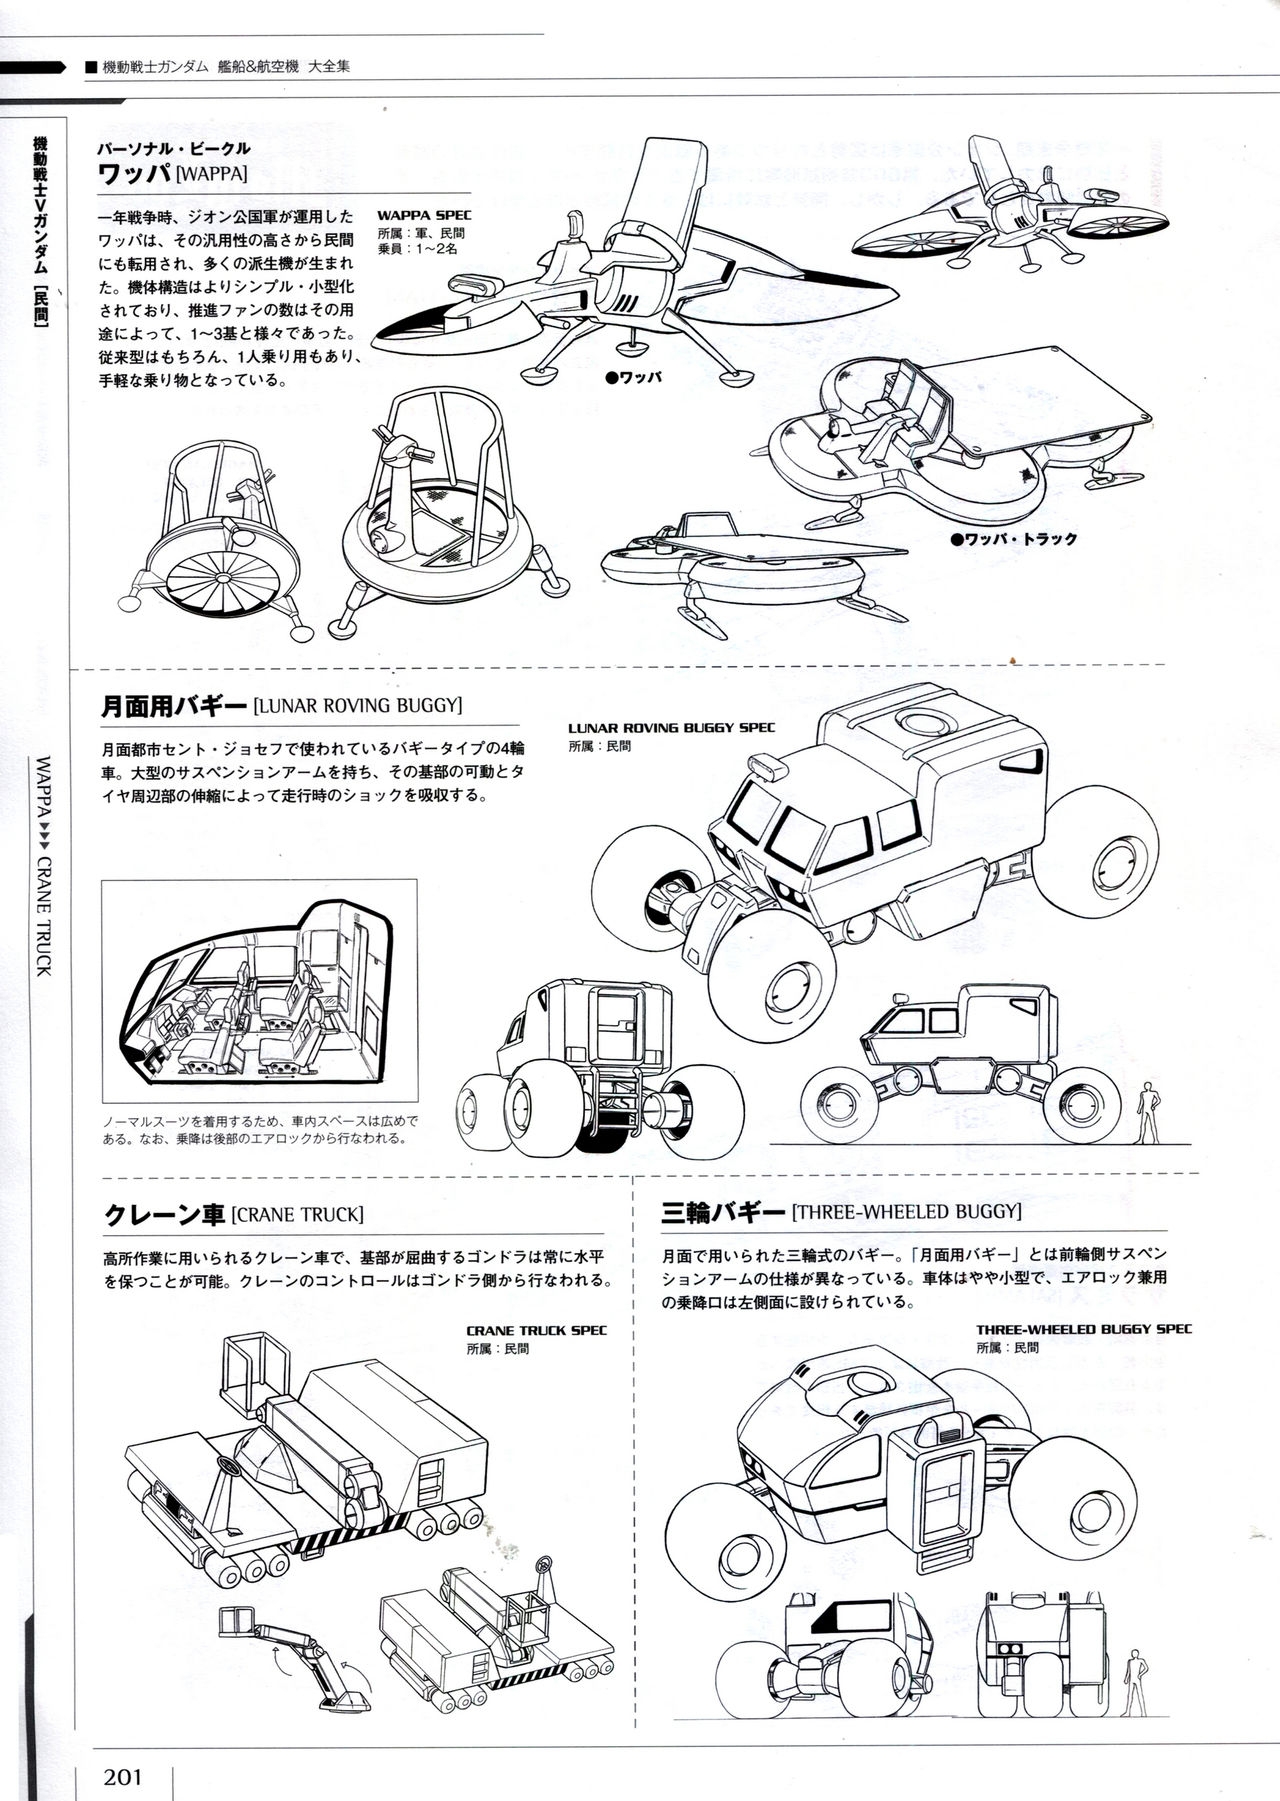 Mobile Suit Gundam - Ship & Aerospace Plane Encyclopedia - Revised Edition 206